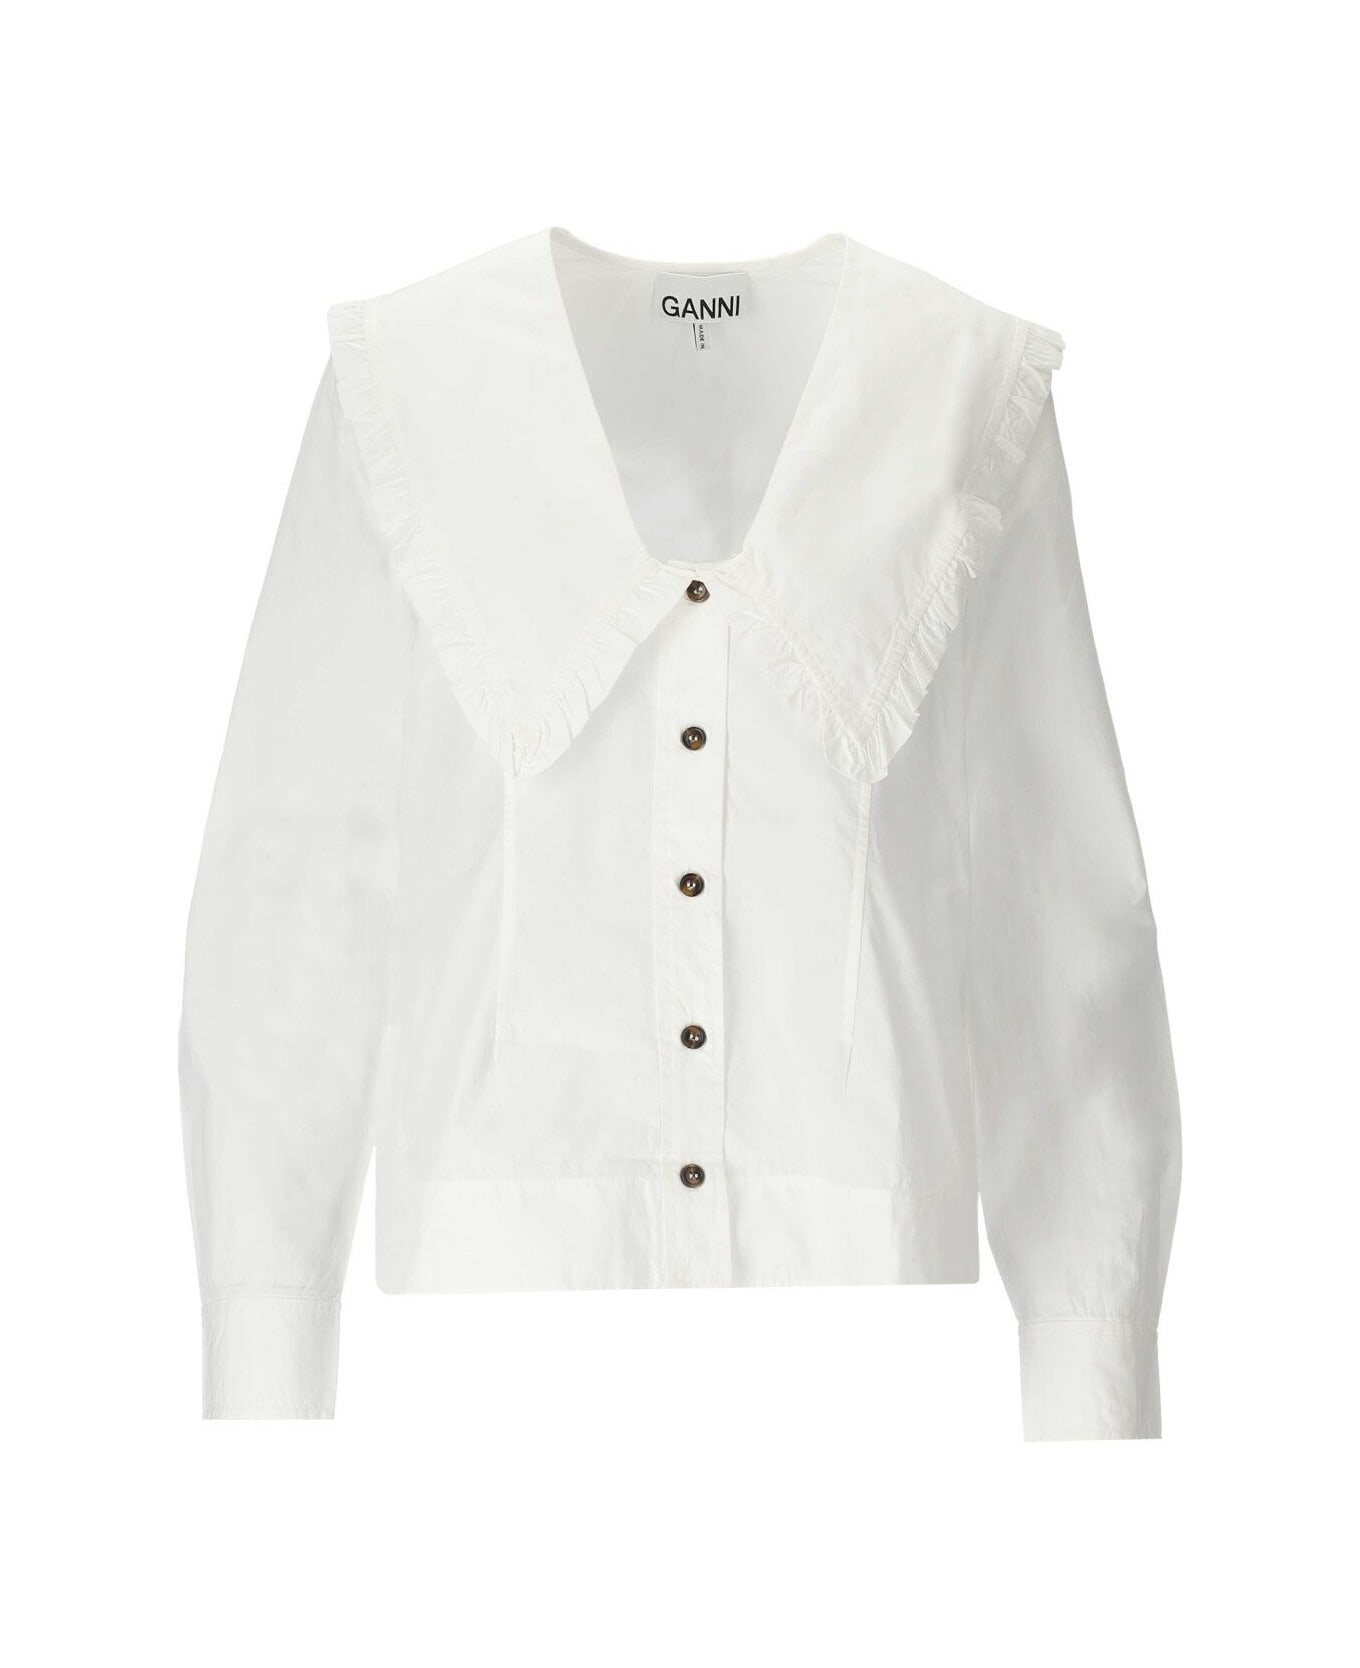 Ganni White Shirt With Maxi Collar - Bianco